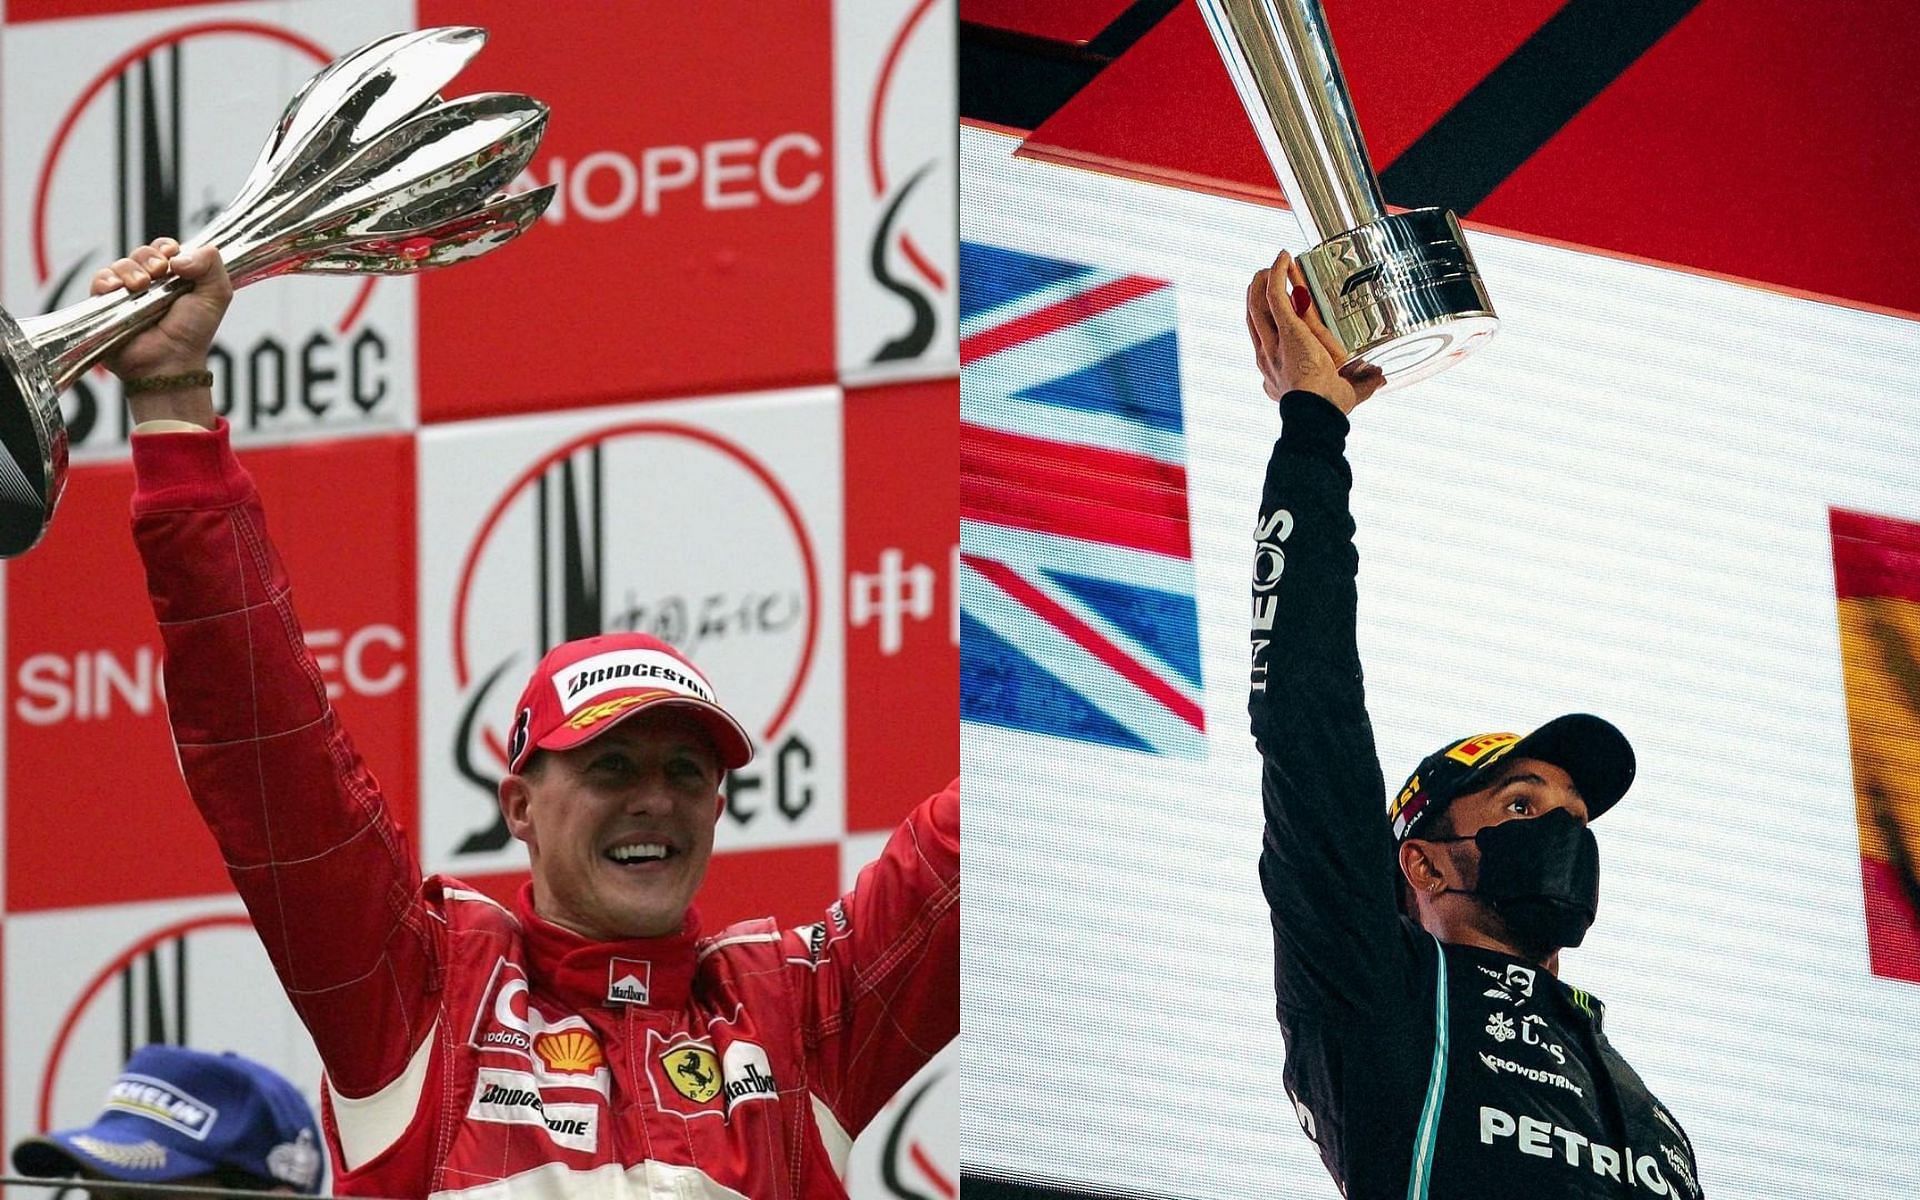 Michael Schumacher and Lewis Hamilton (via Instagram @michaelschumacher, @lewishamilton)